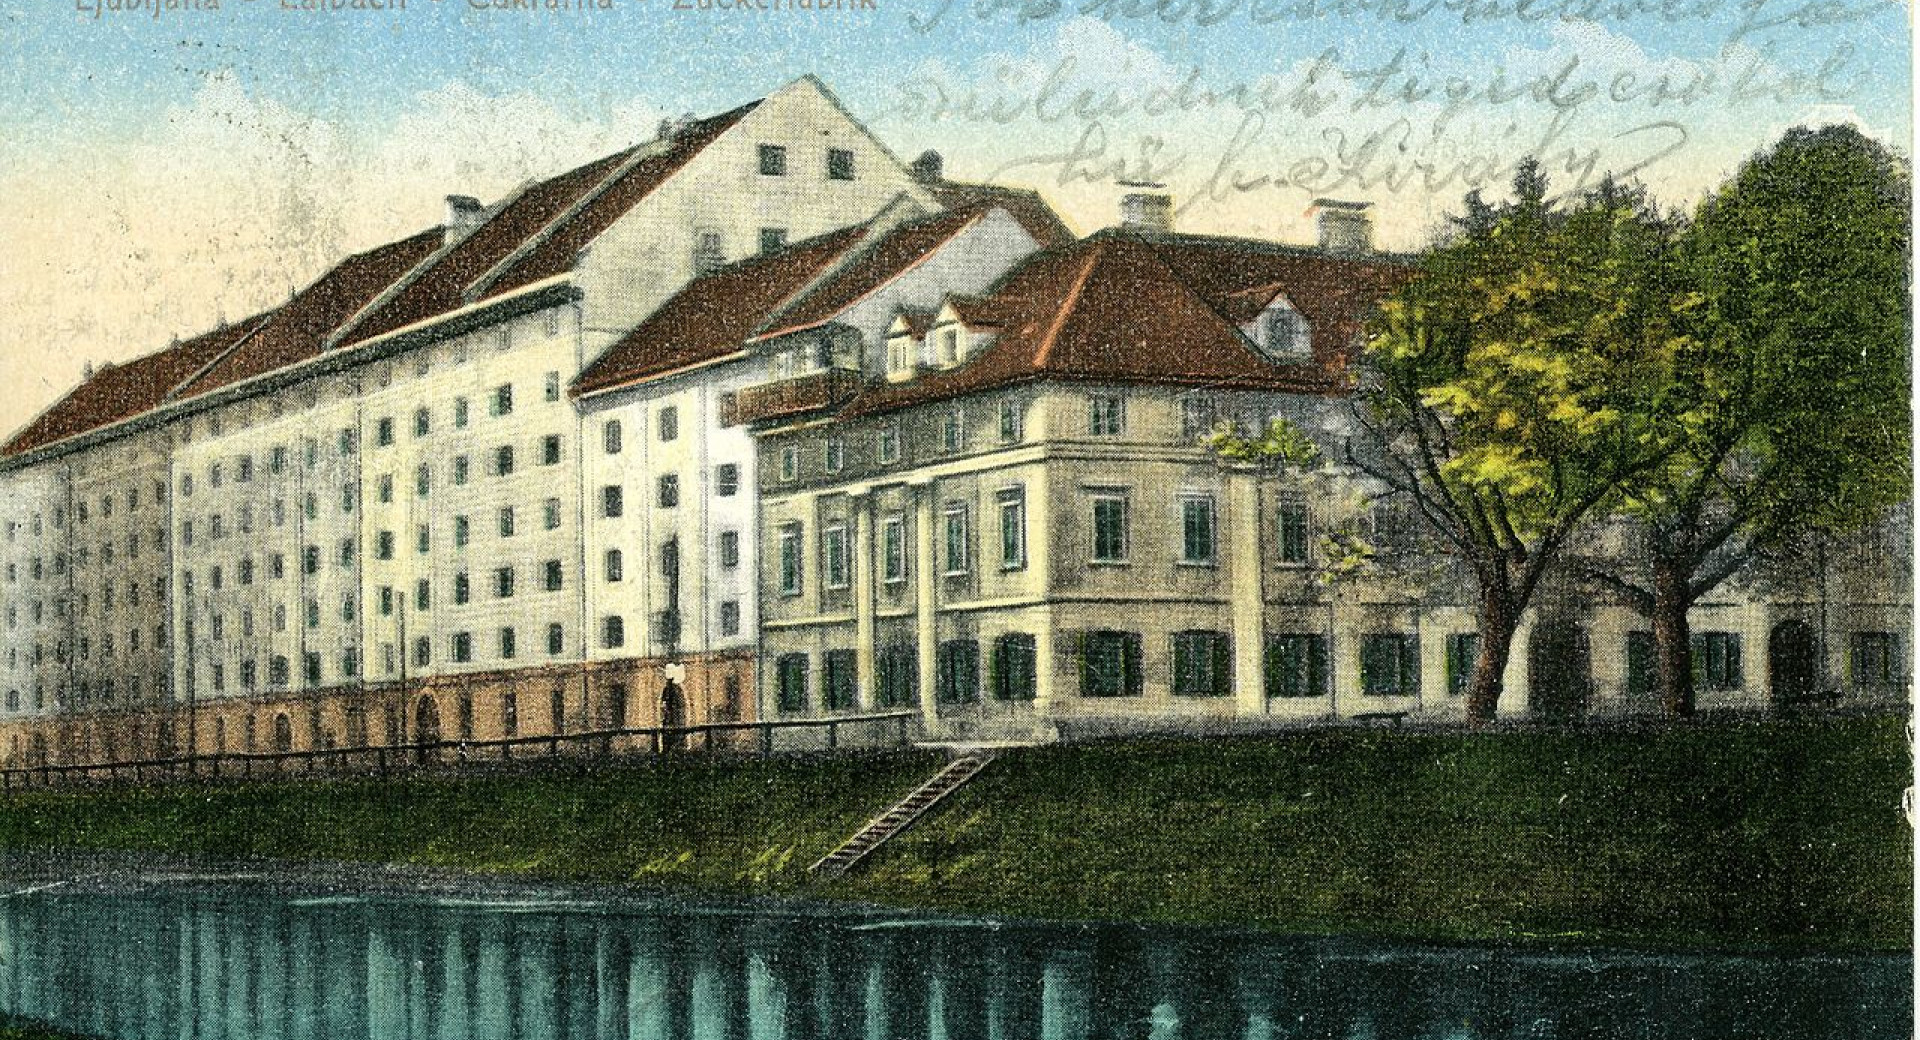 Postcard of Cukrarna 1917